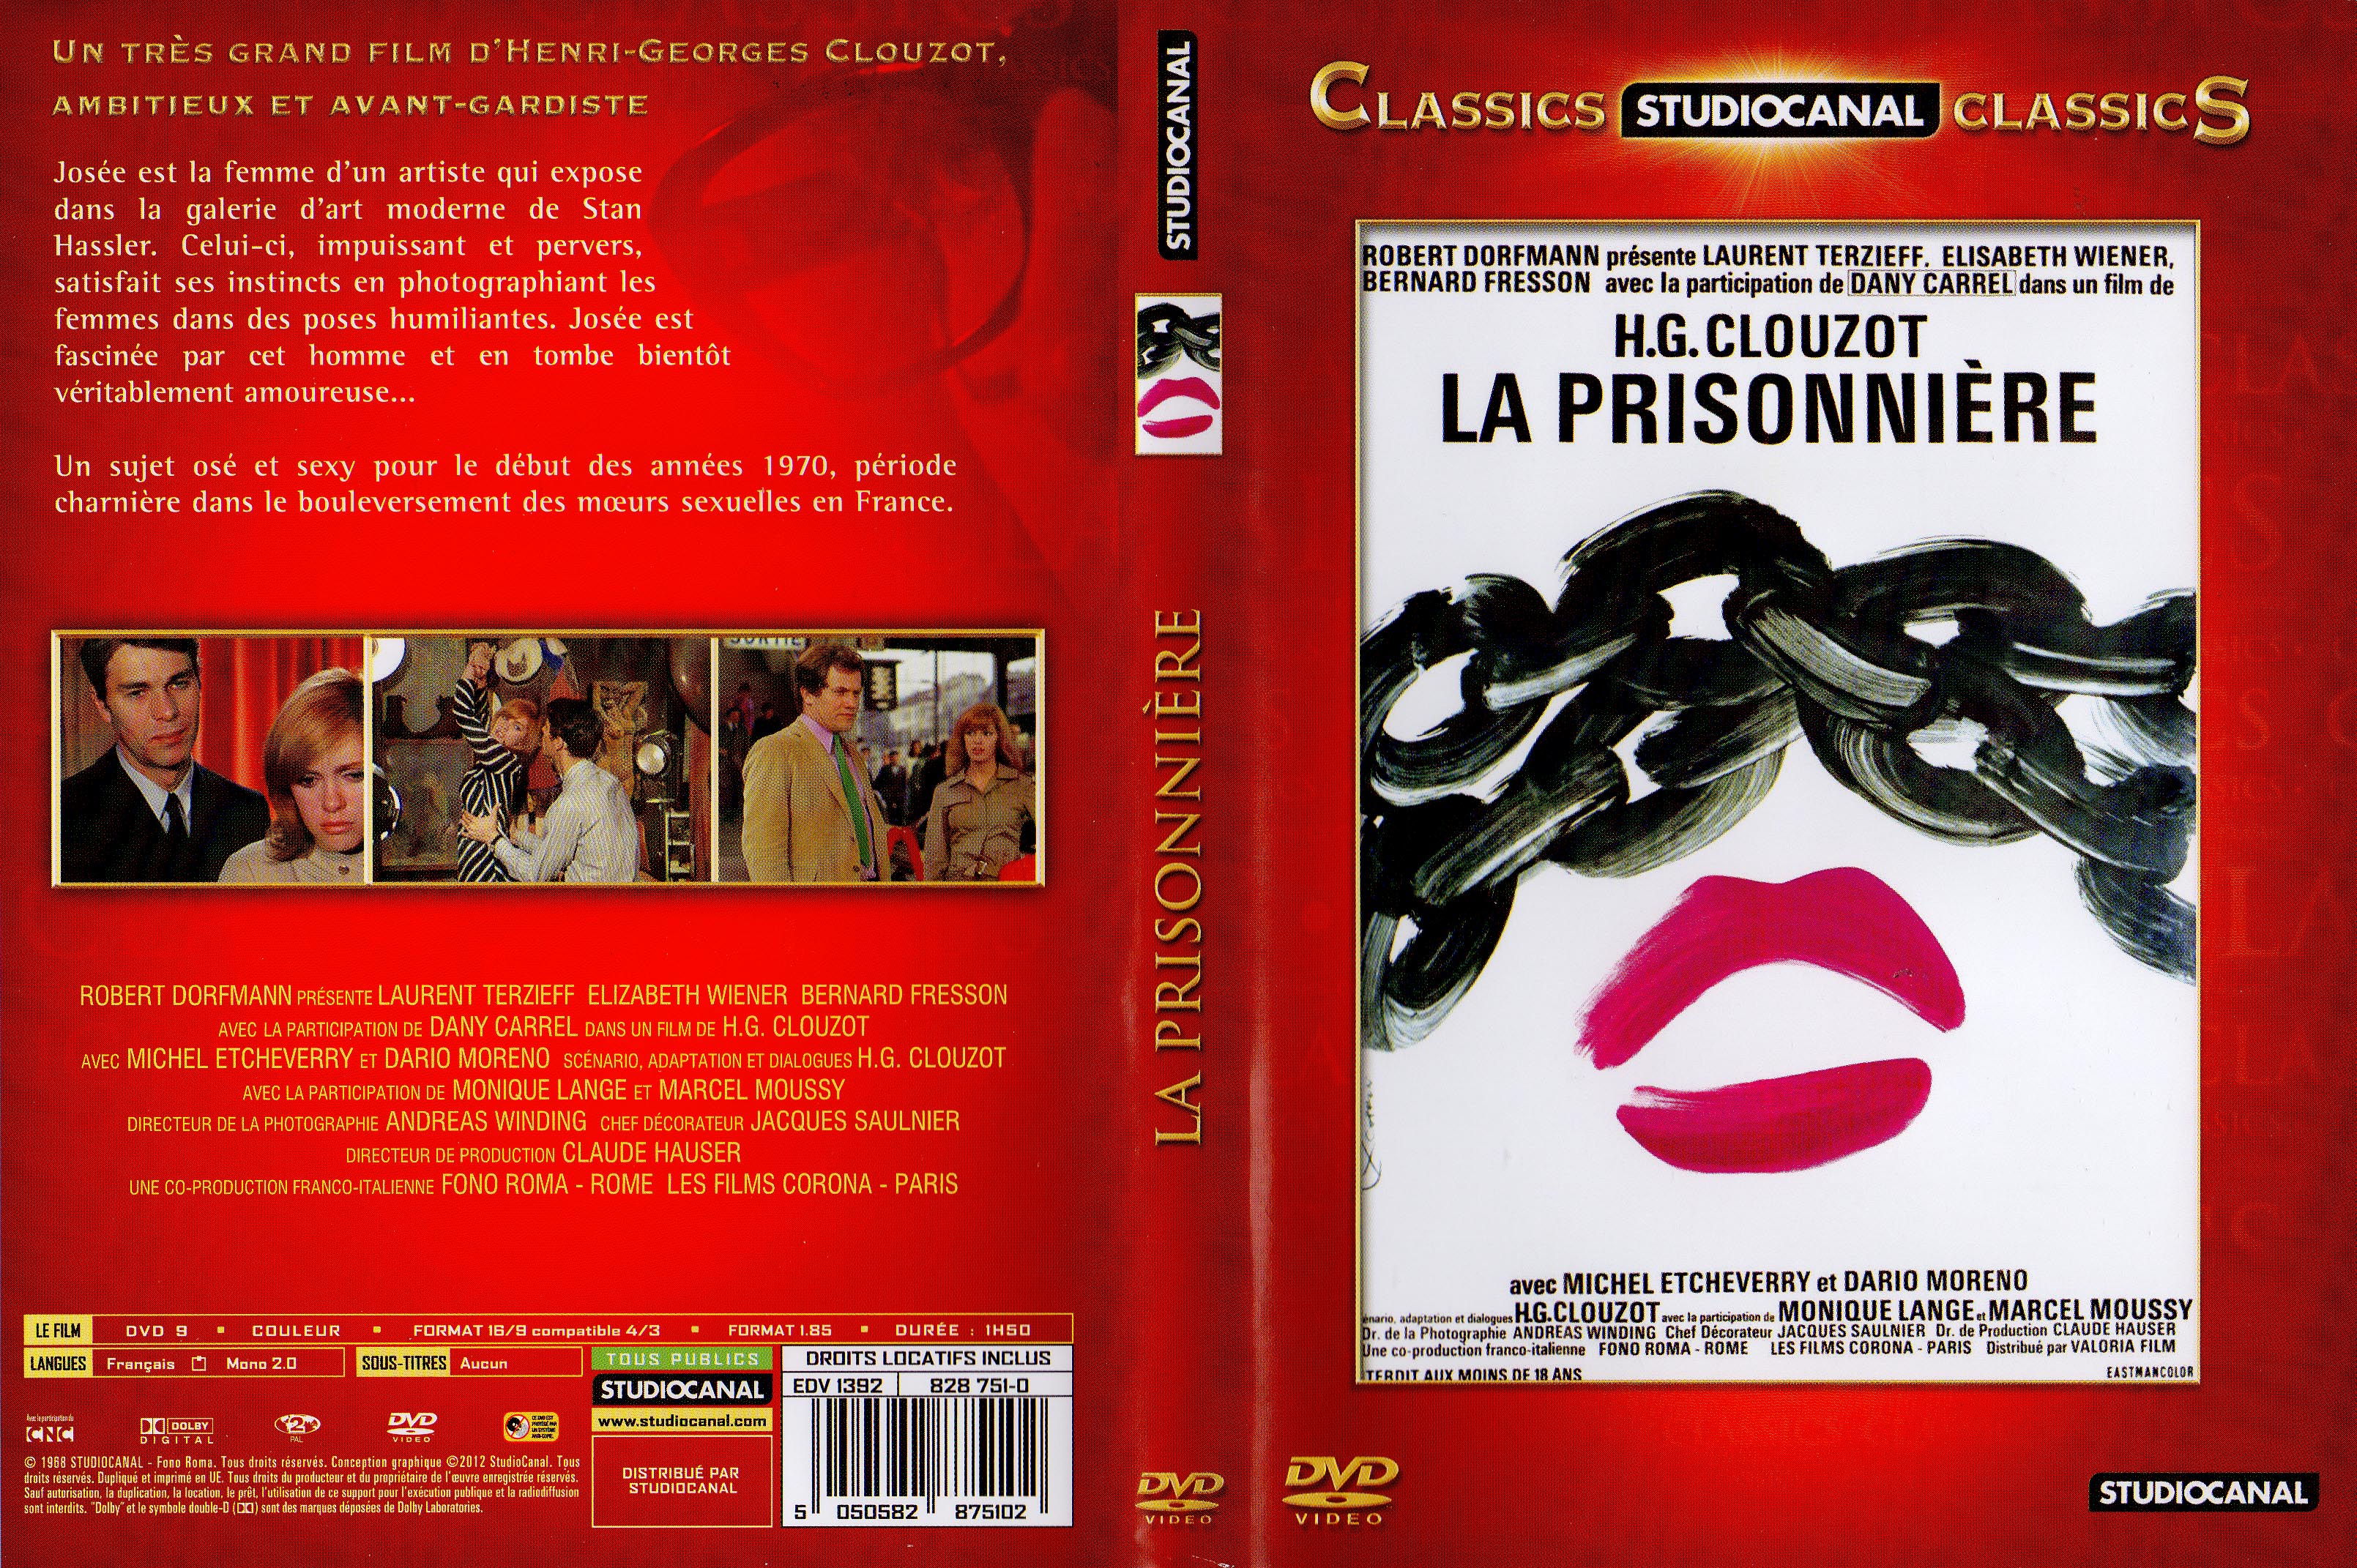 Jaquette DVD La prisonnire v2